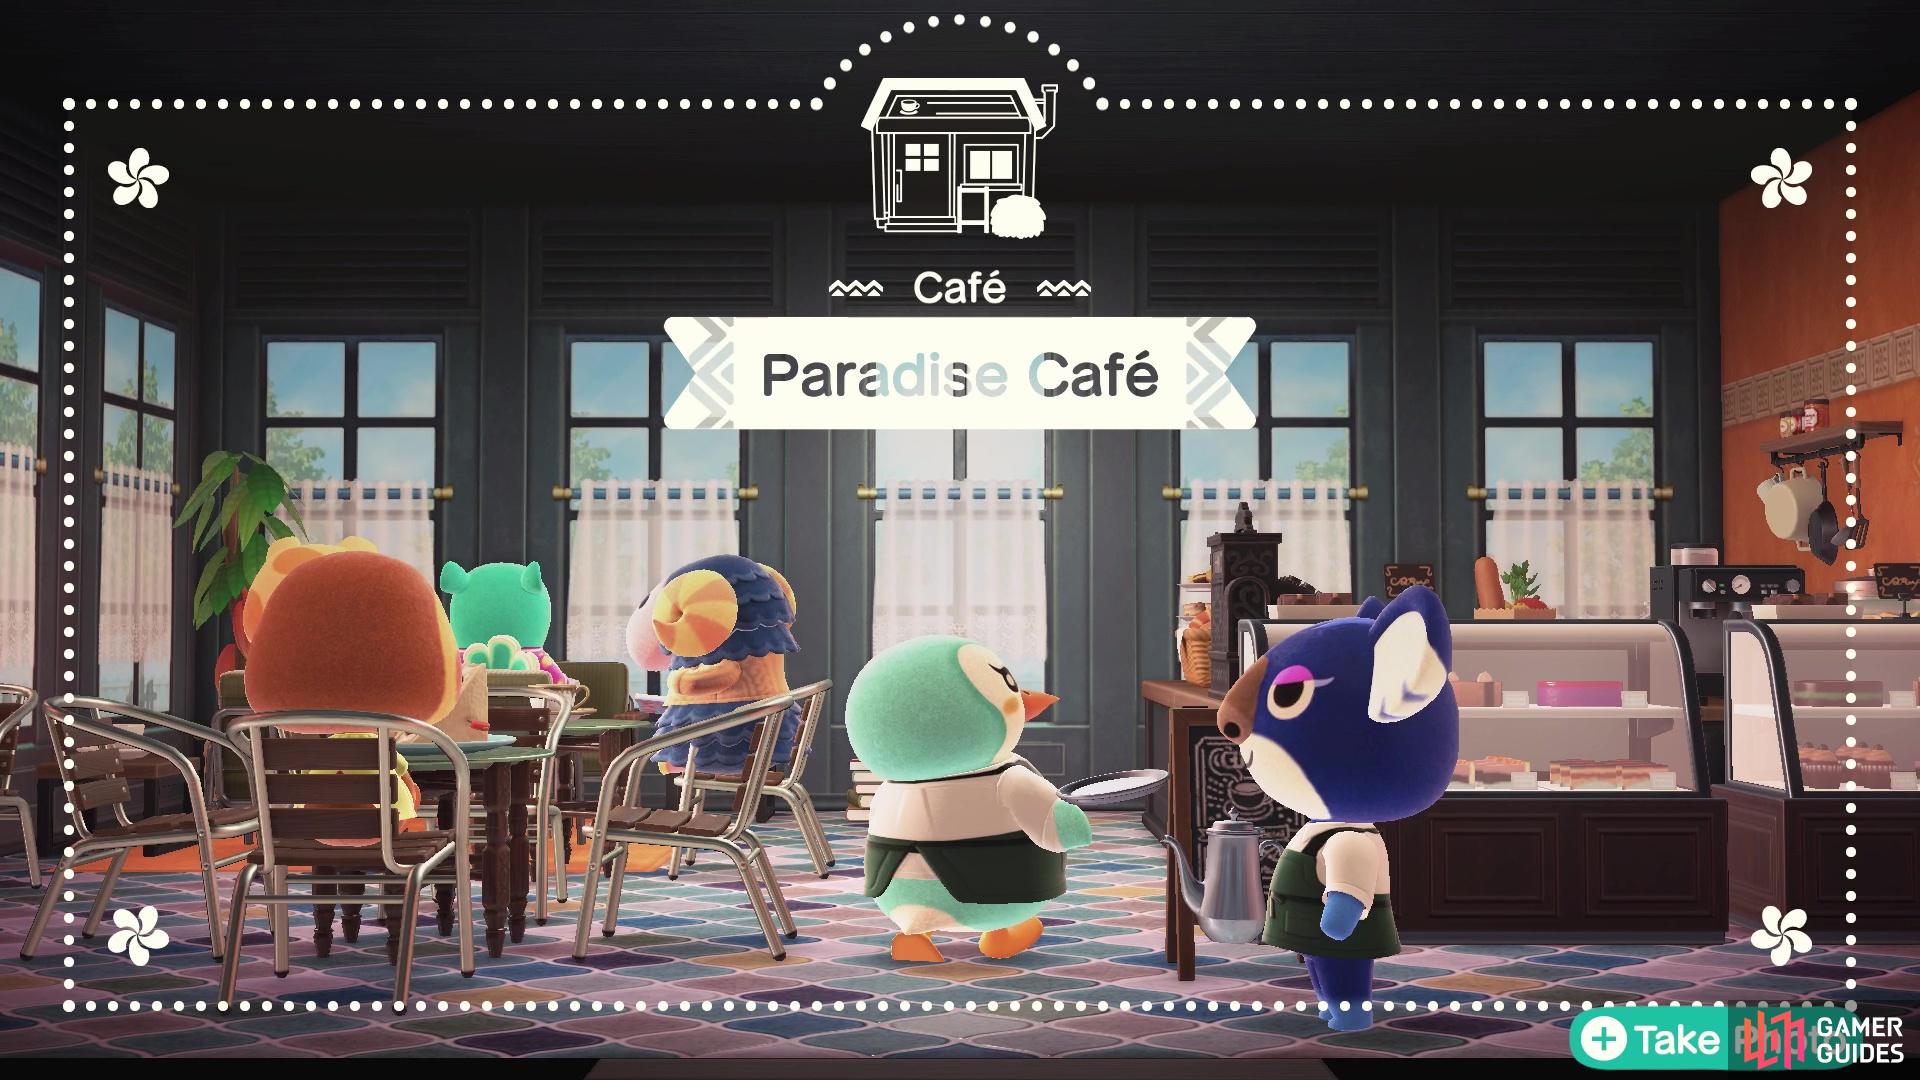 A café for the vacation go-ers!